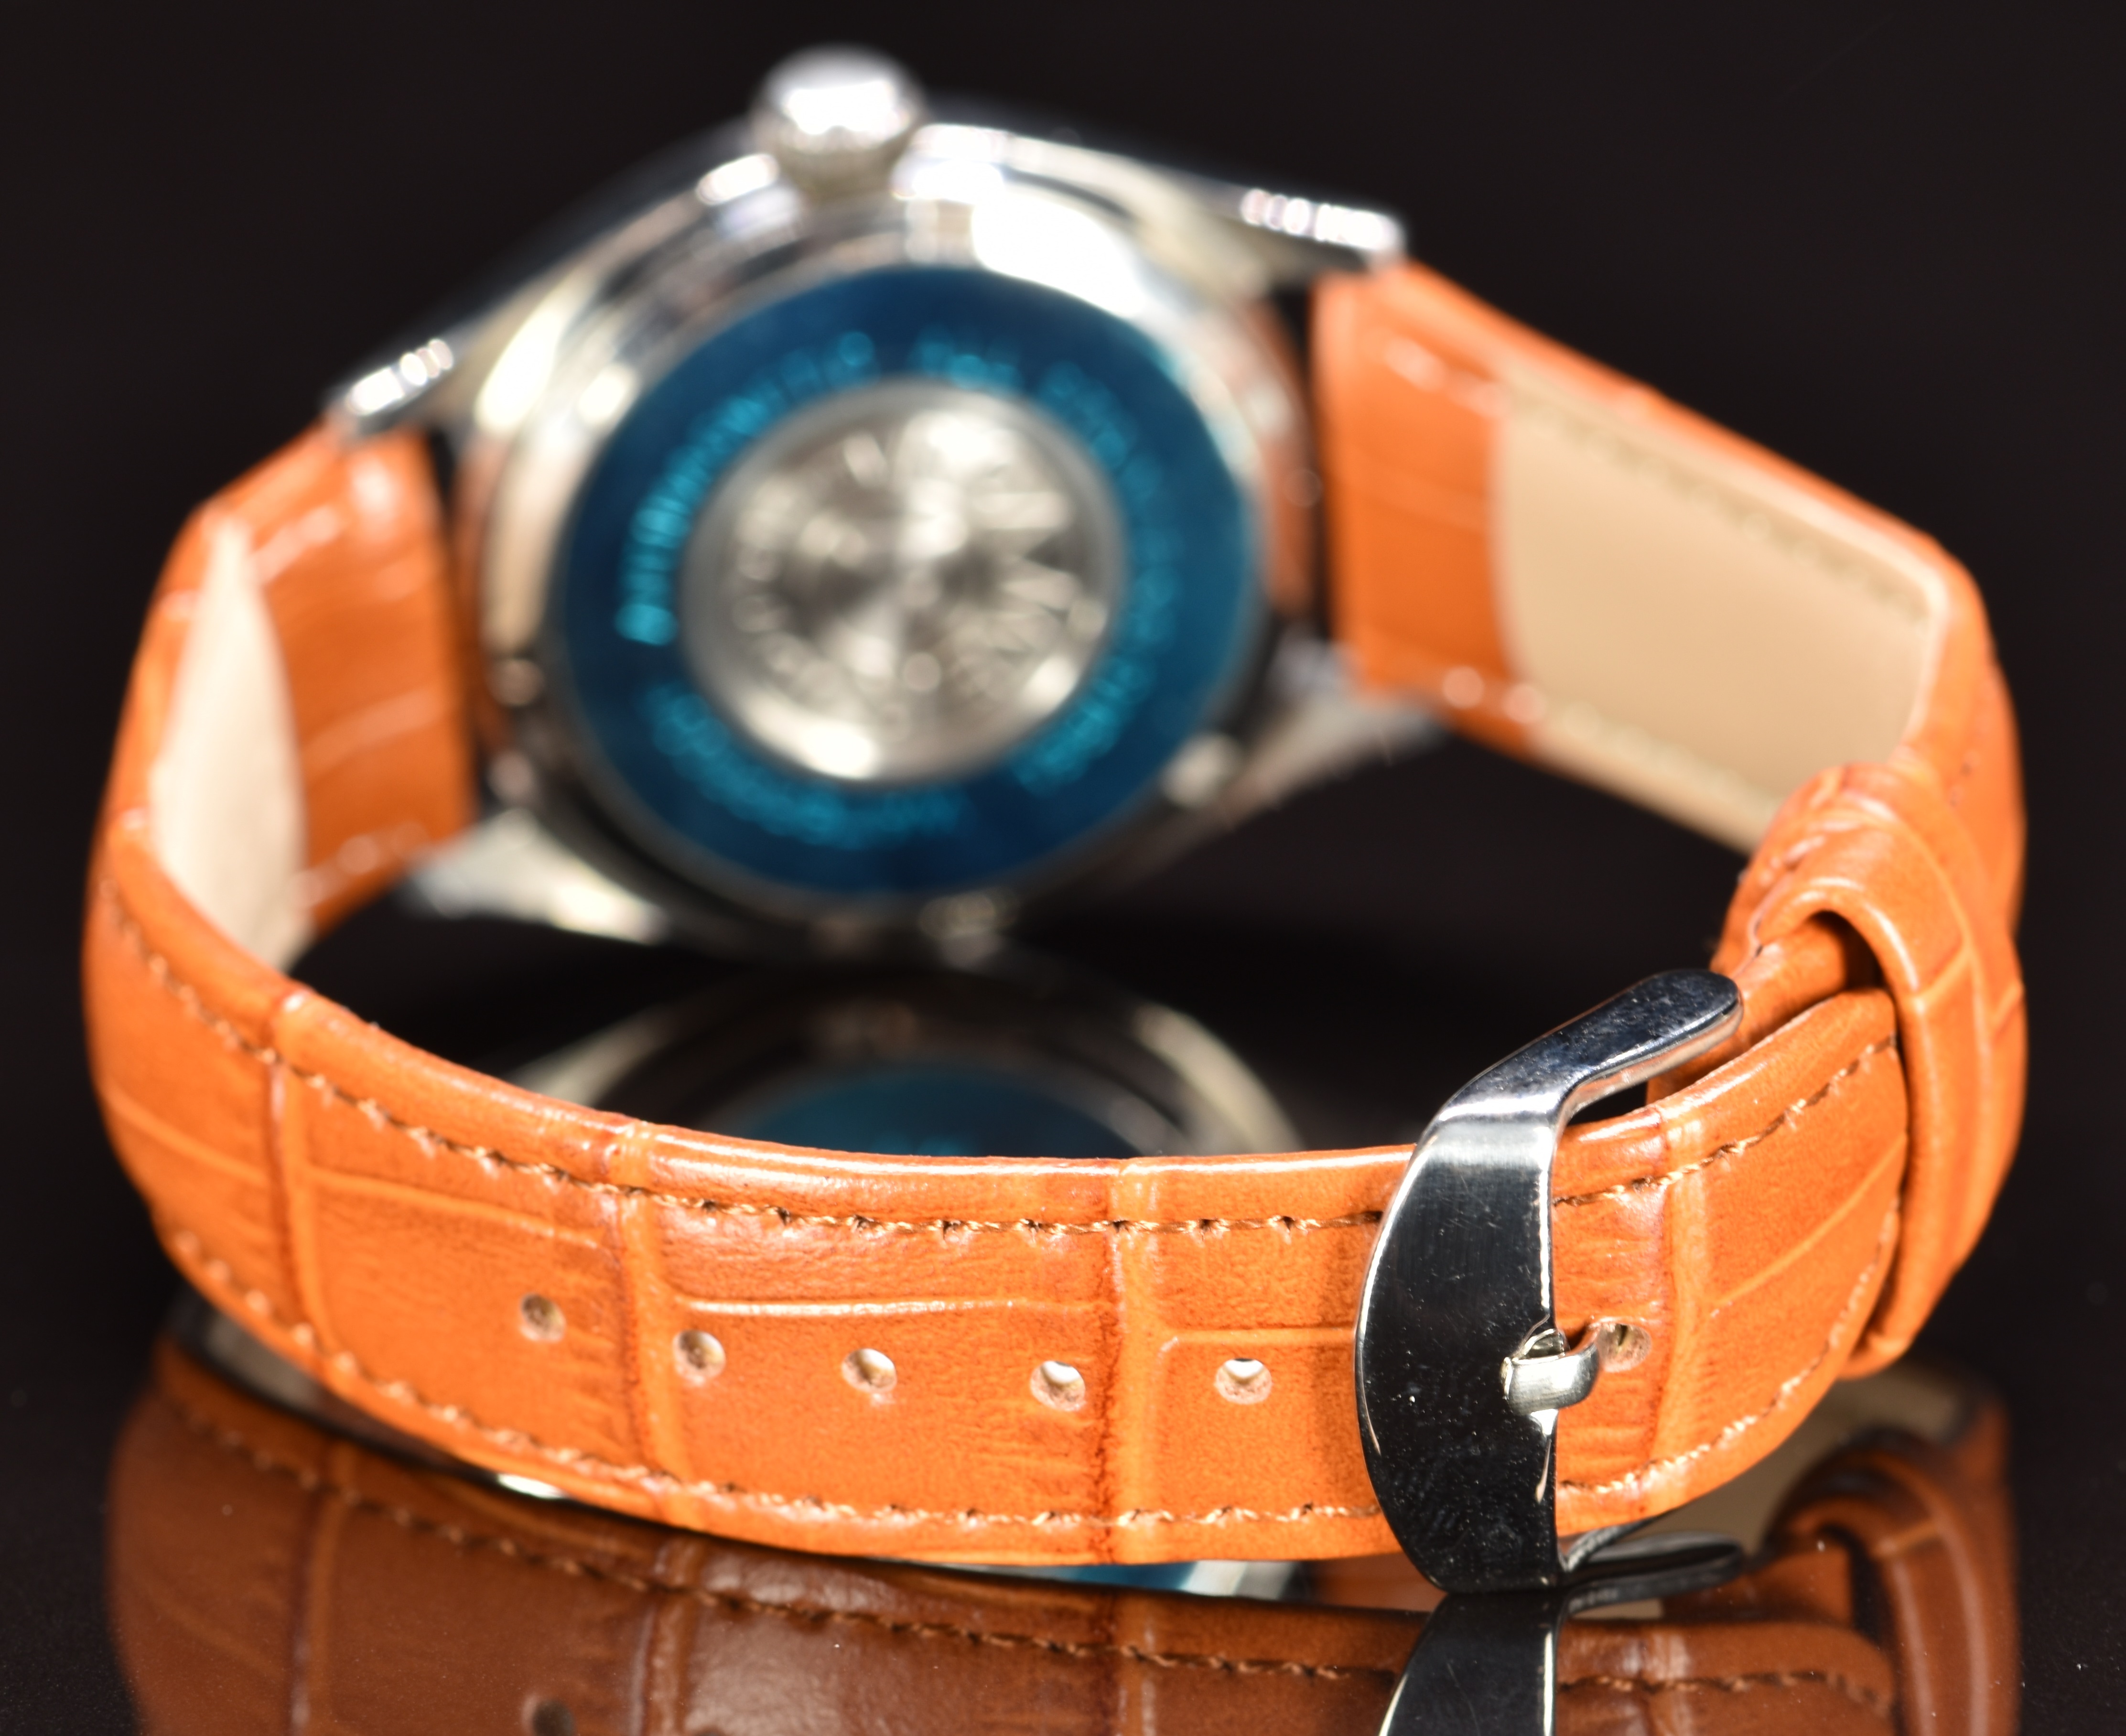 Roamer Elegant Popular gentleman's wristwatch with date aperture luminous hands, white hour markers, - Image 5 of 6